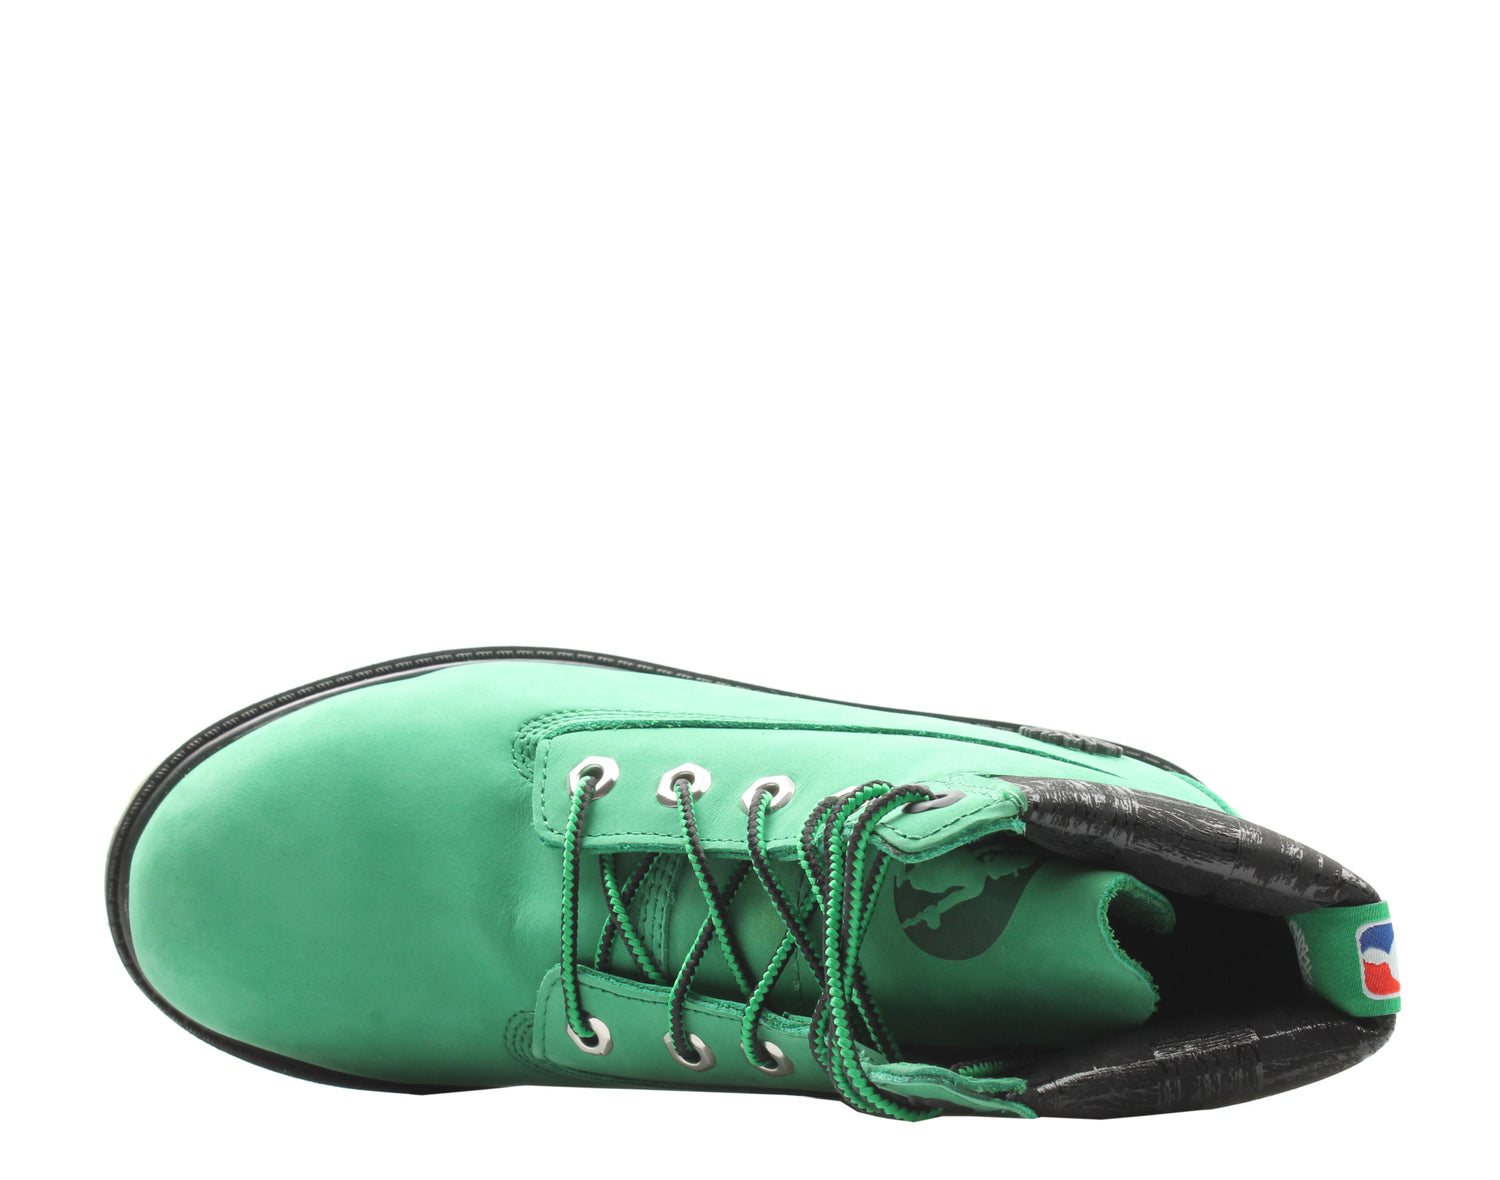 Timberland x NBA Boston Celtics 6-Inch Premium Waterproof Junior Big Kids Boots